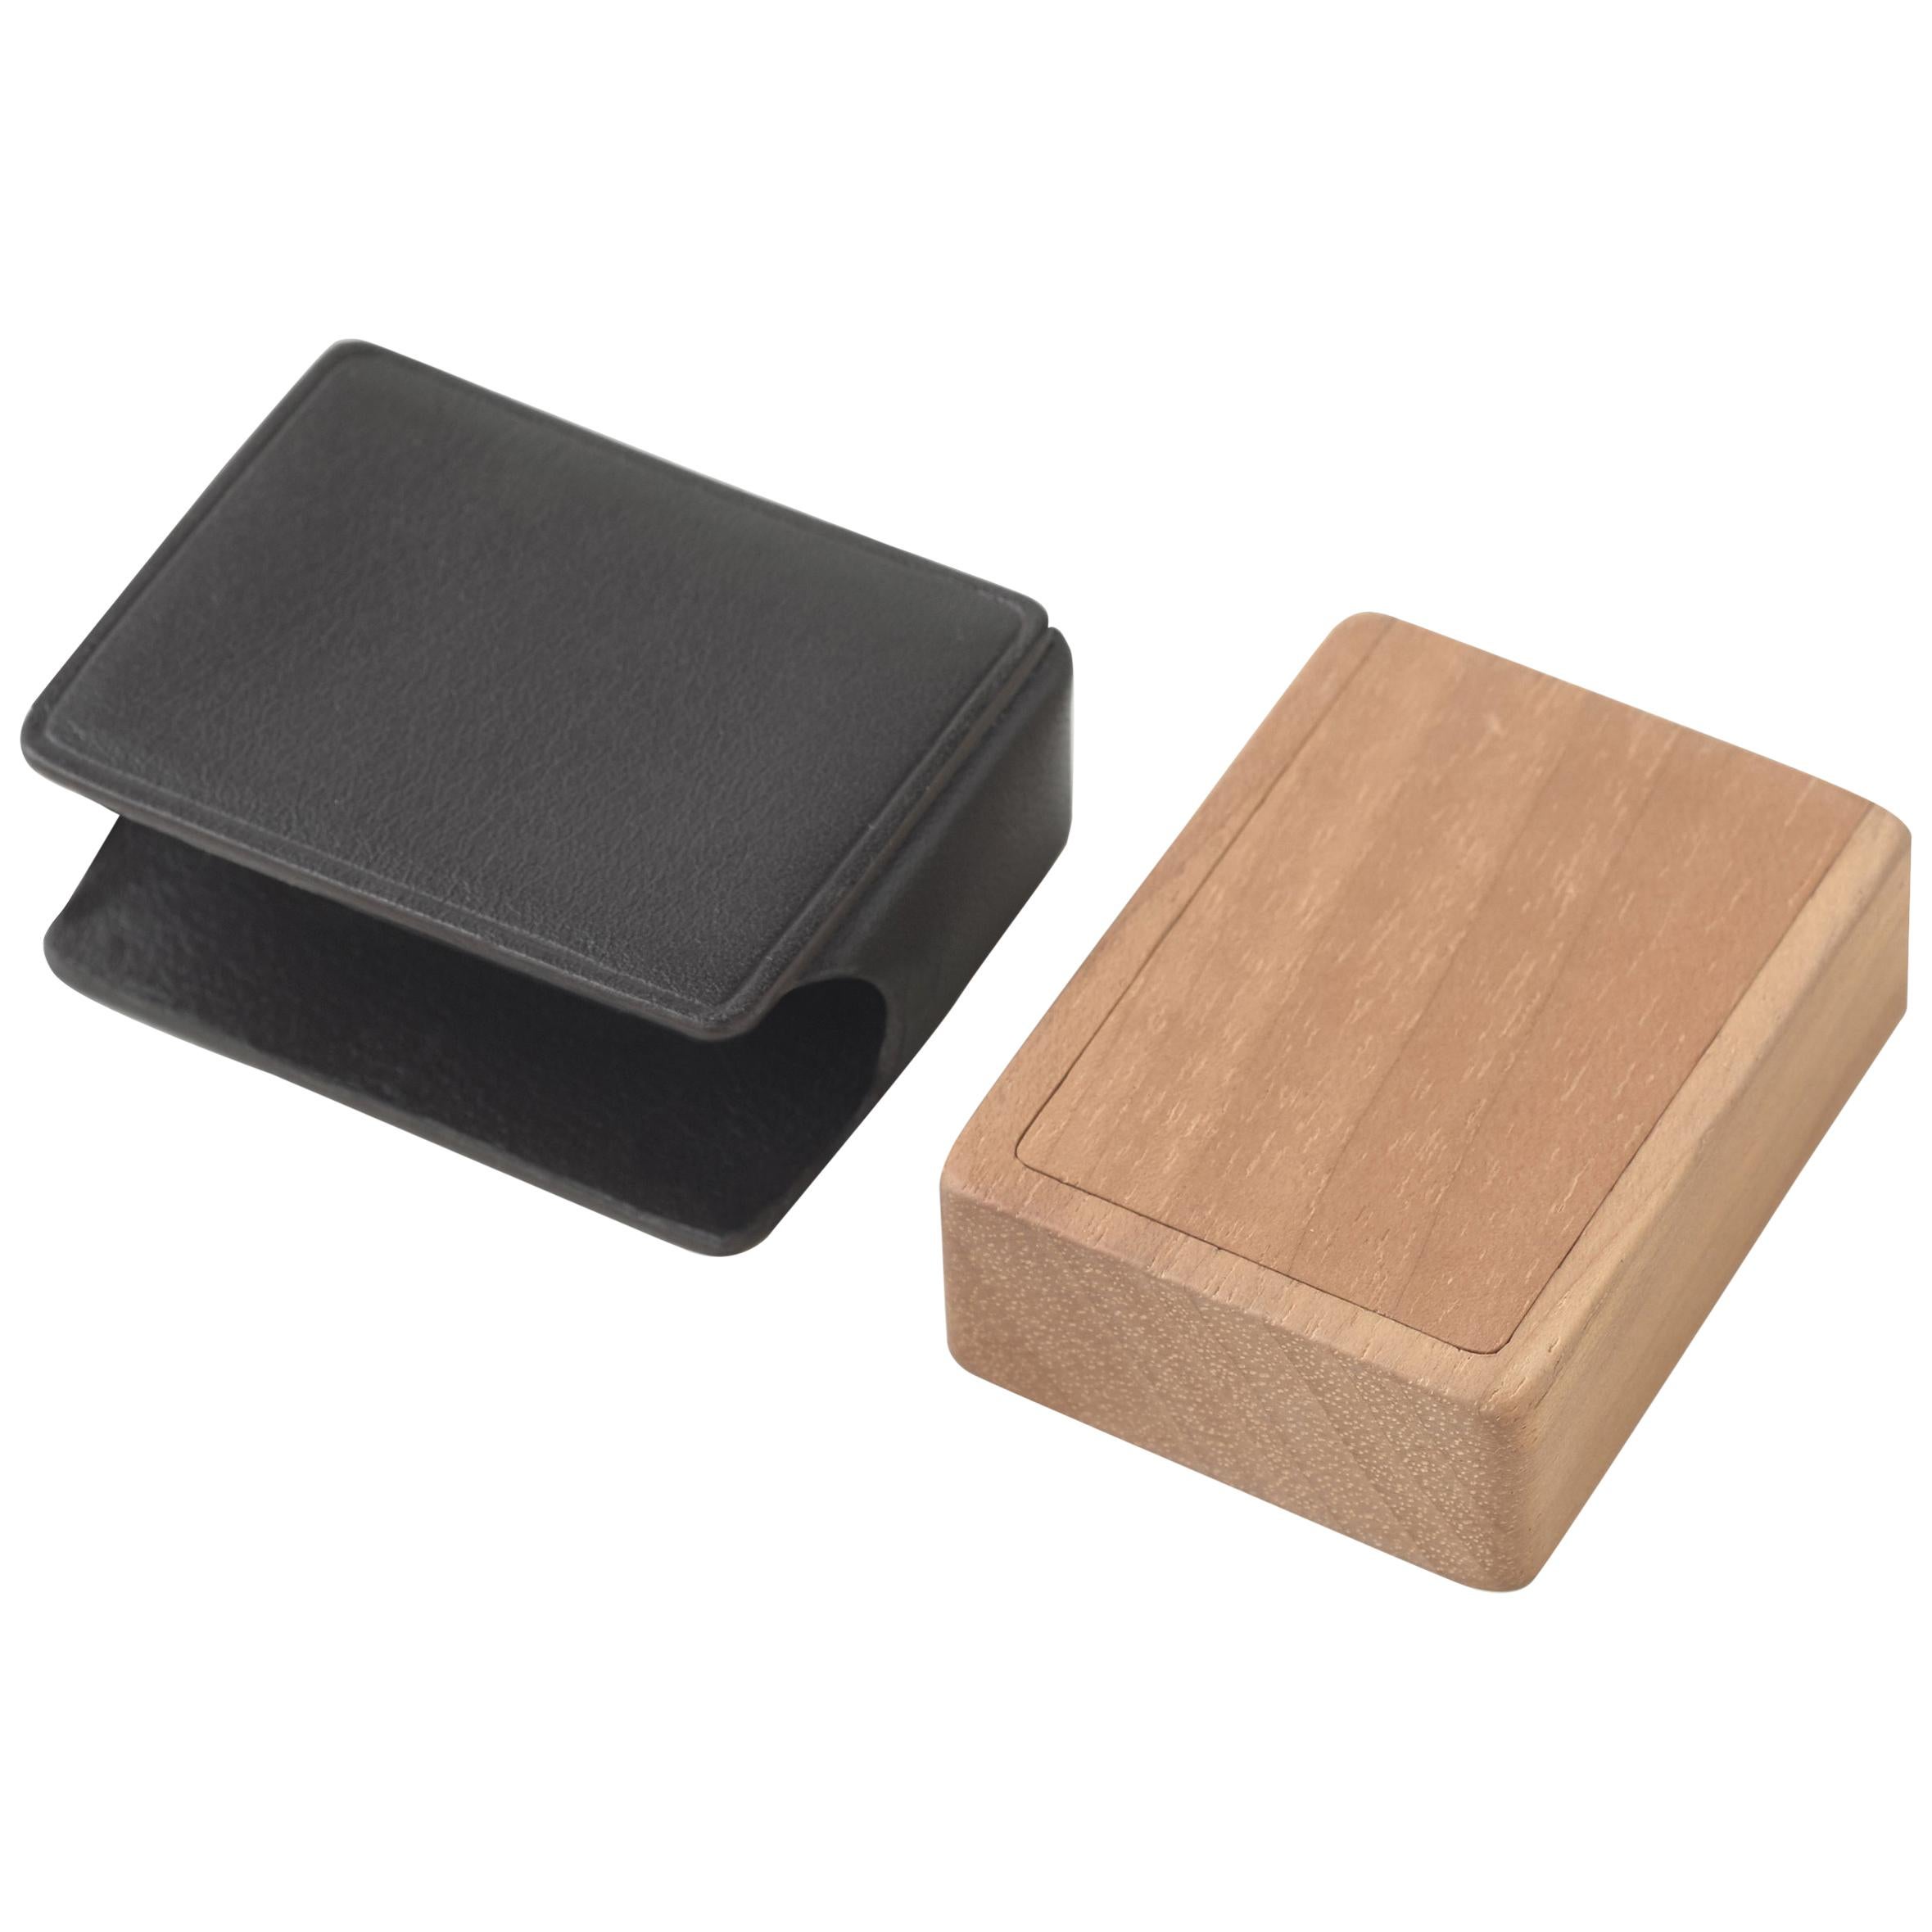 For Sale: Black Portapillole Con Custodia Wooden Pillbox with Leather Case by Bottega Ghianda